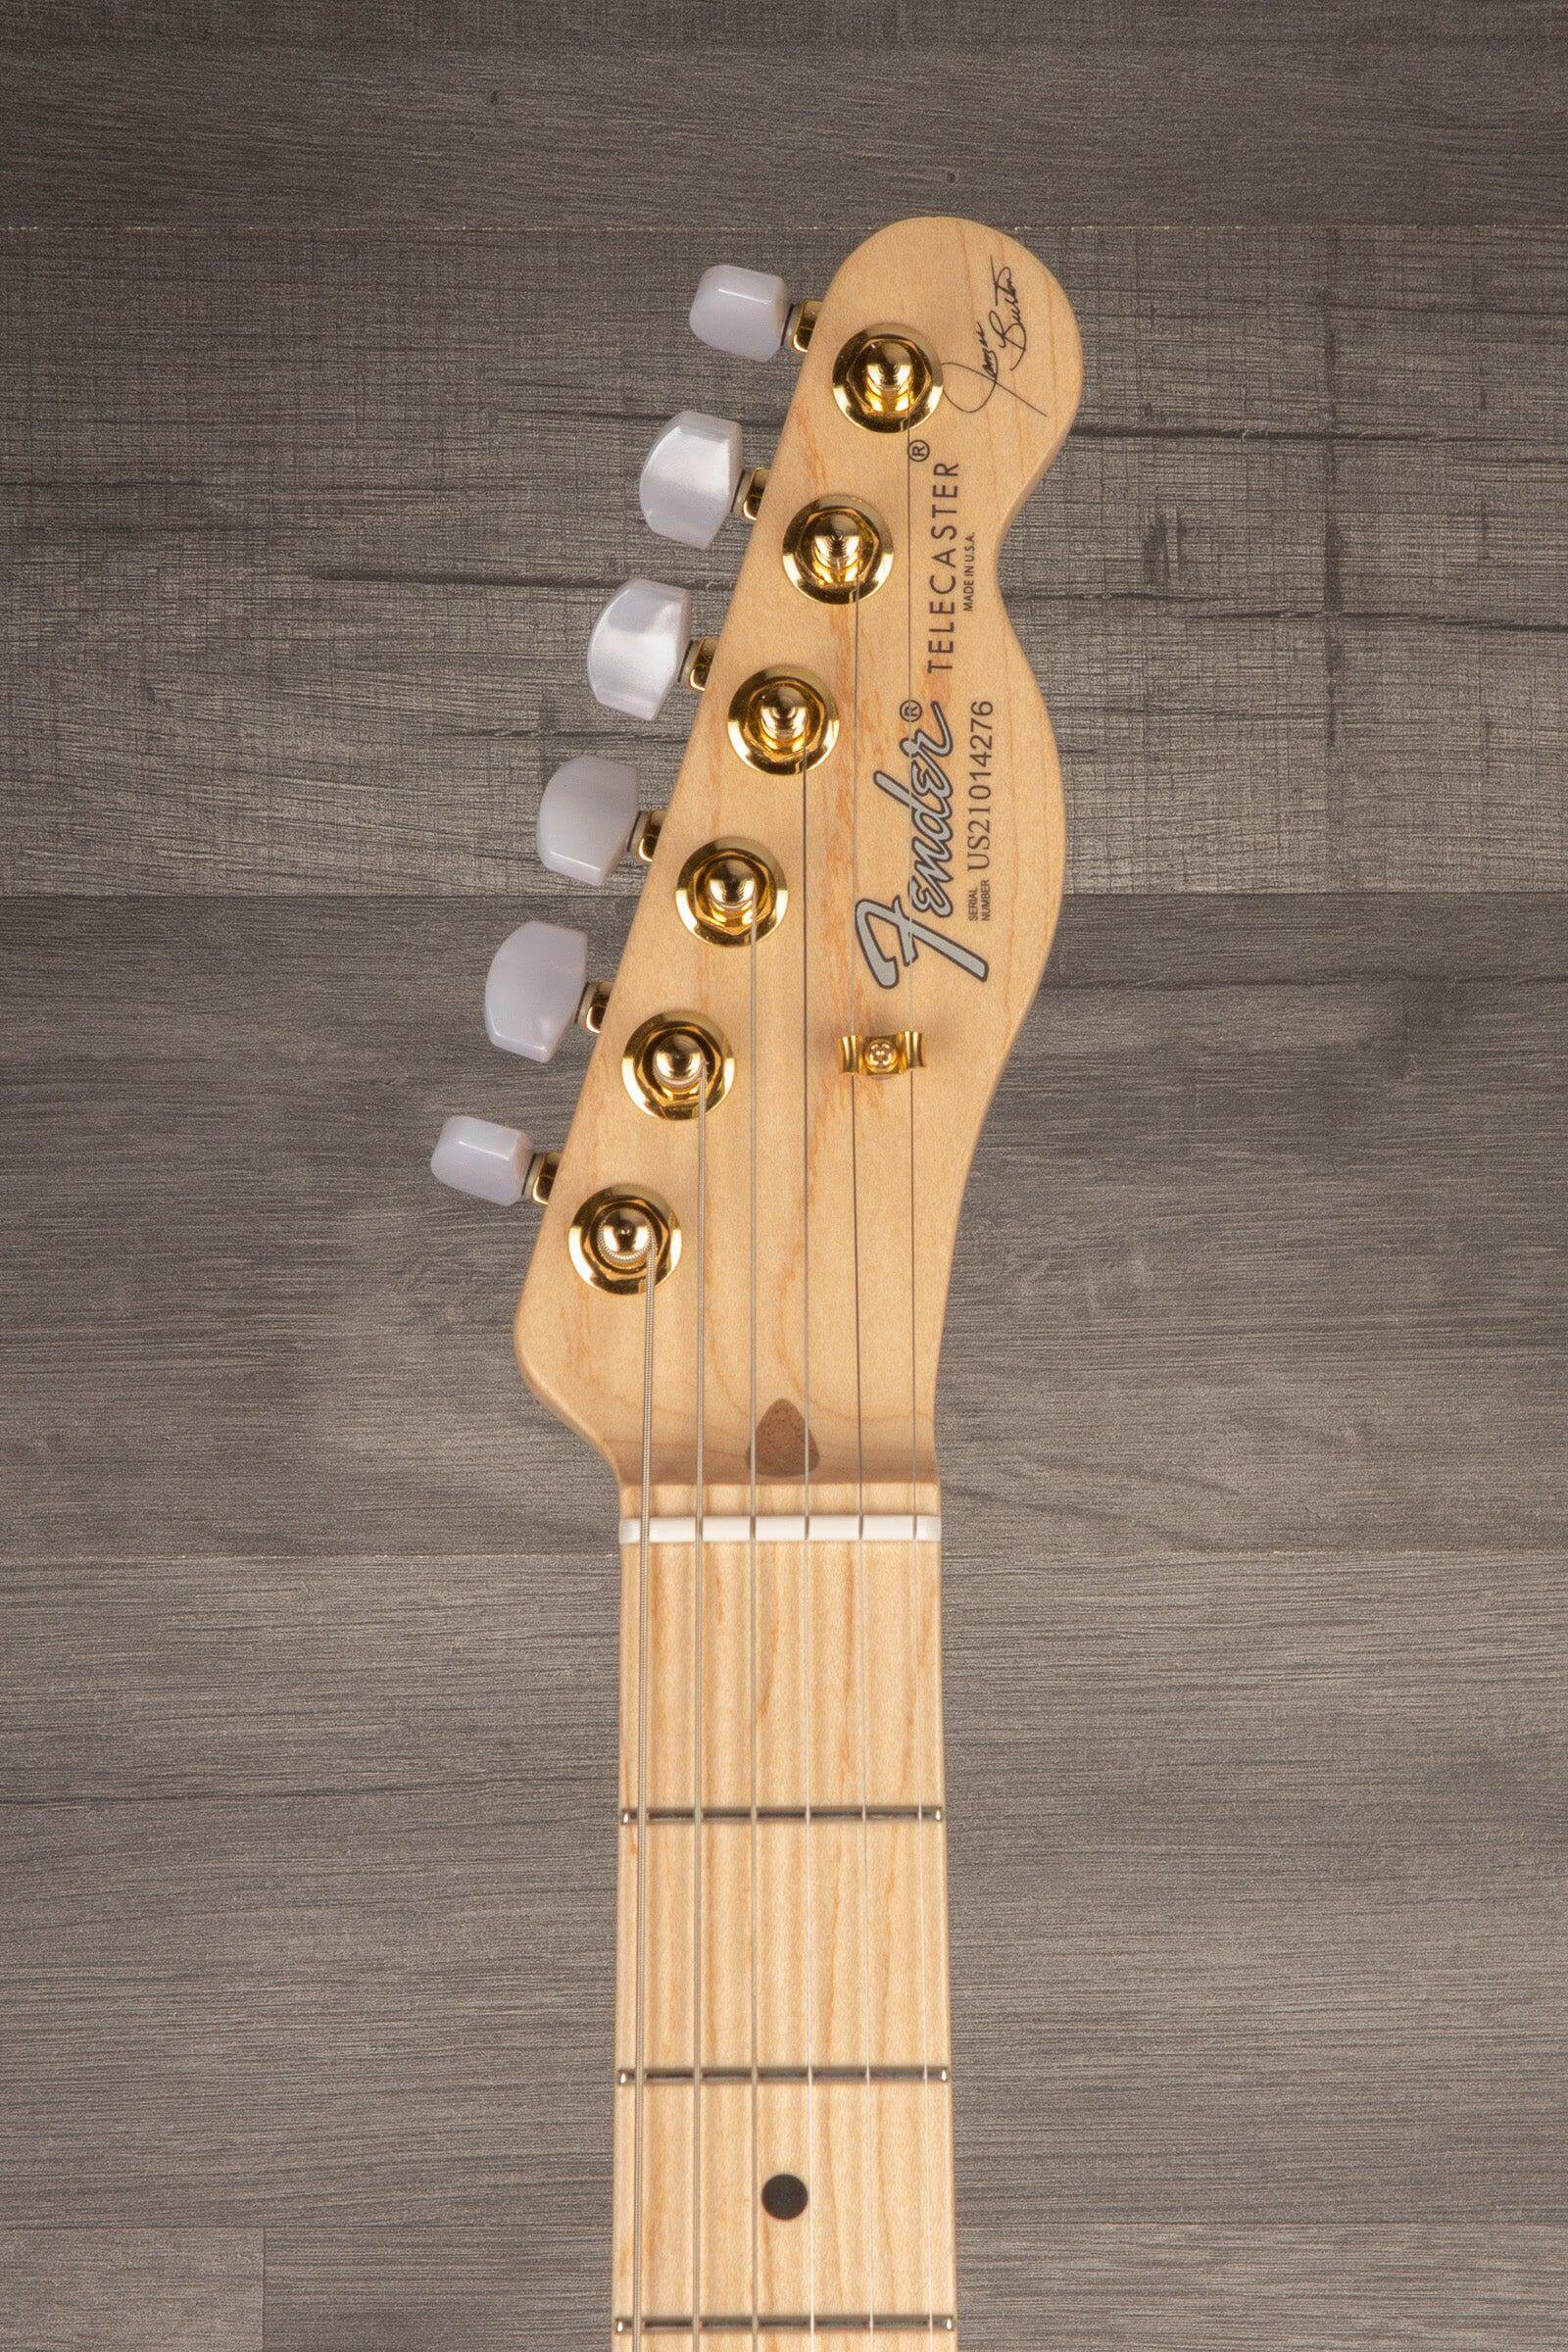 Fender James Burton Telecaster - MusicStreet